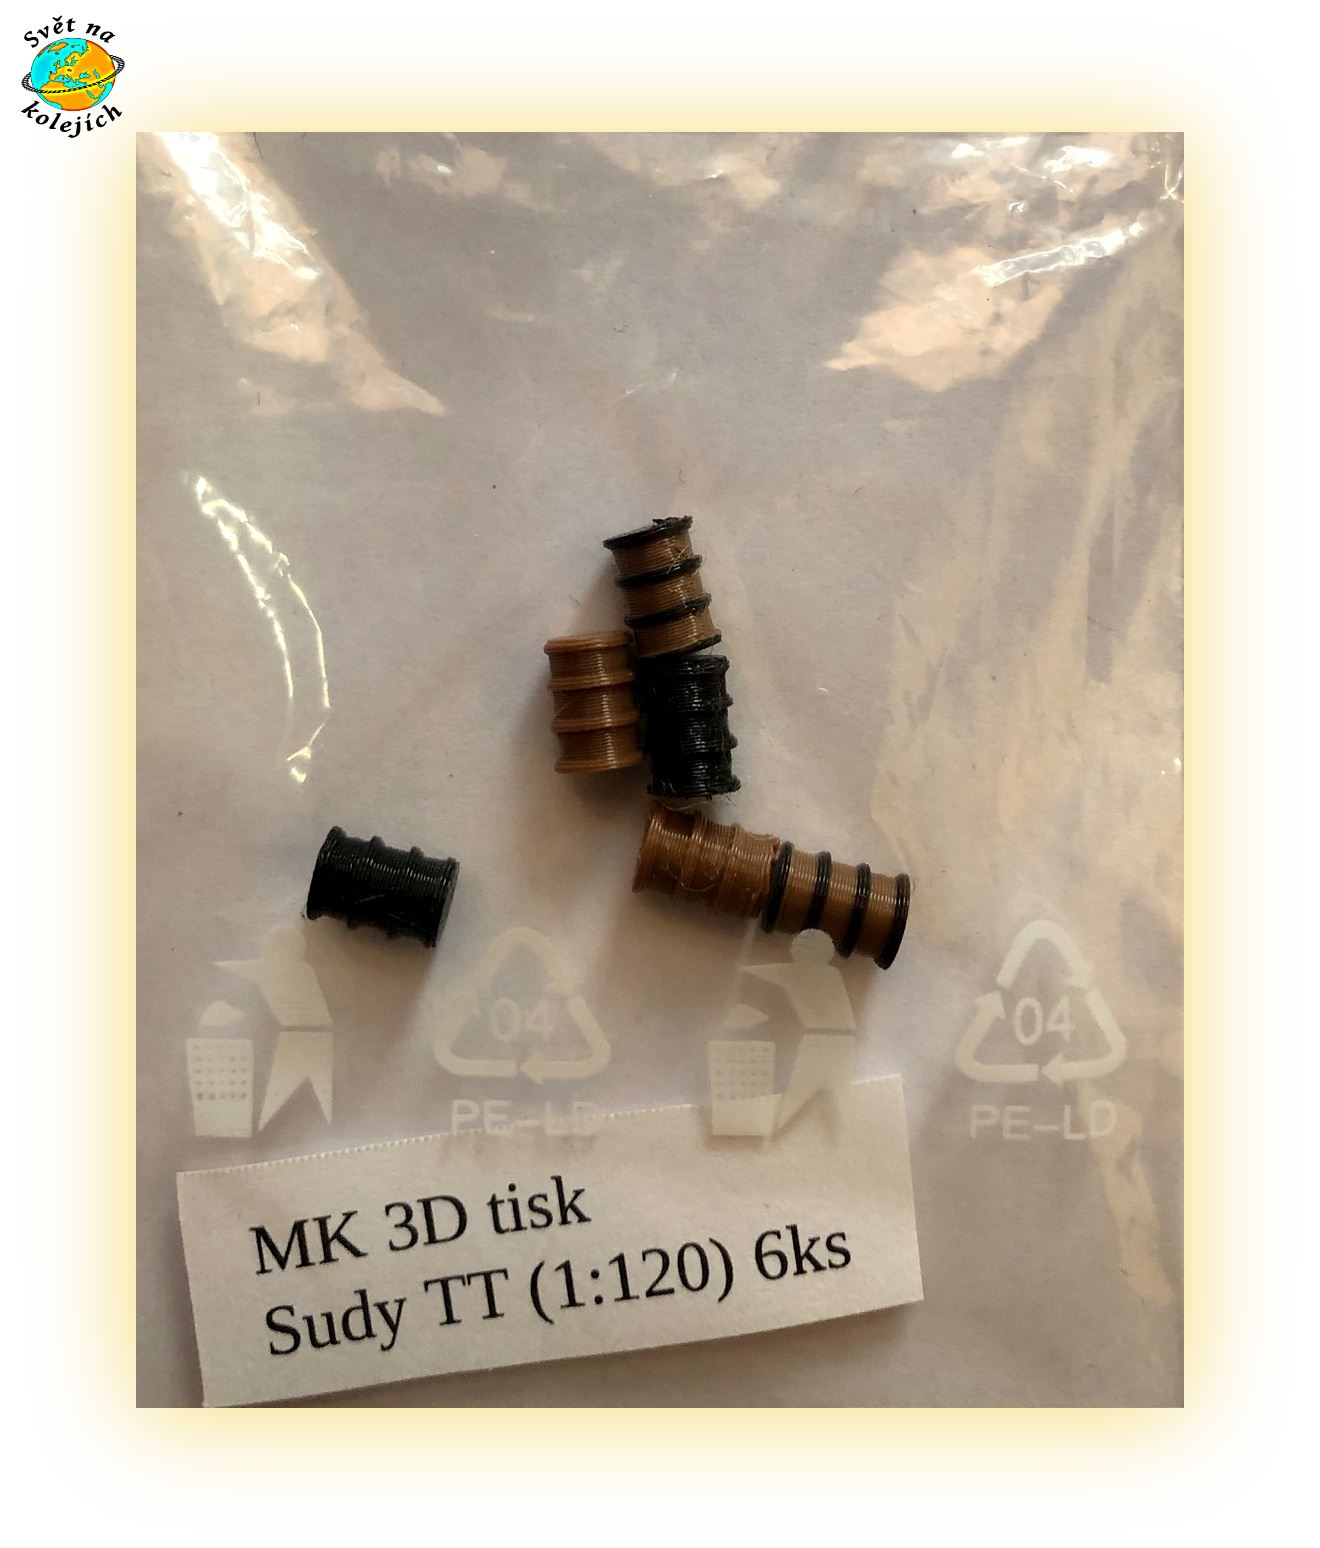 MK MODEL TSU1 TT - SUDY 6ks 